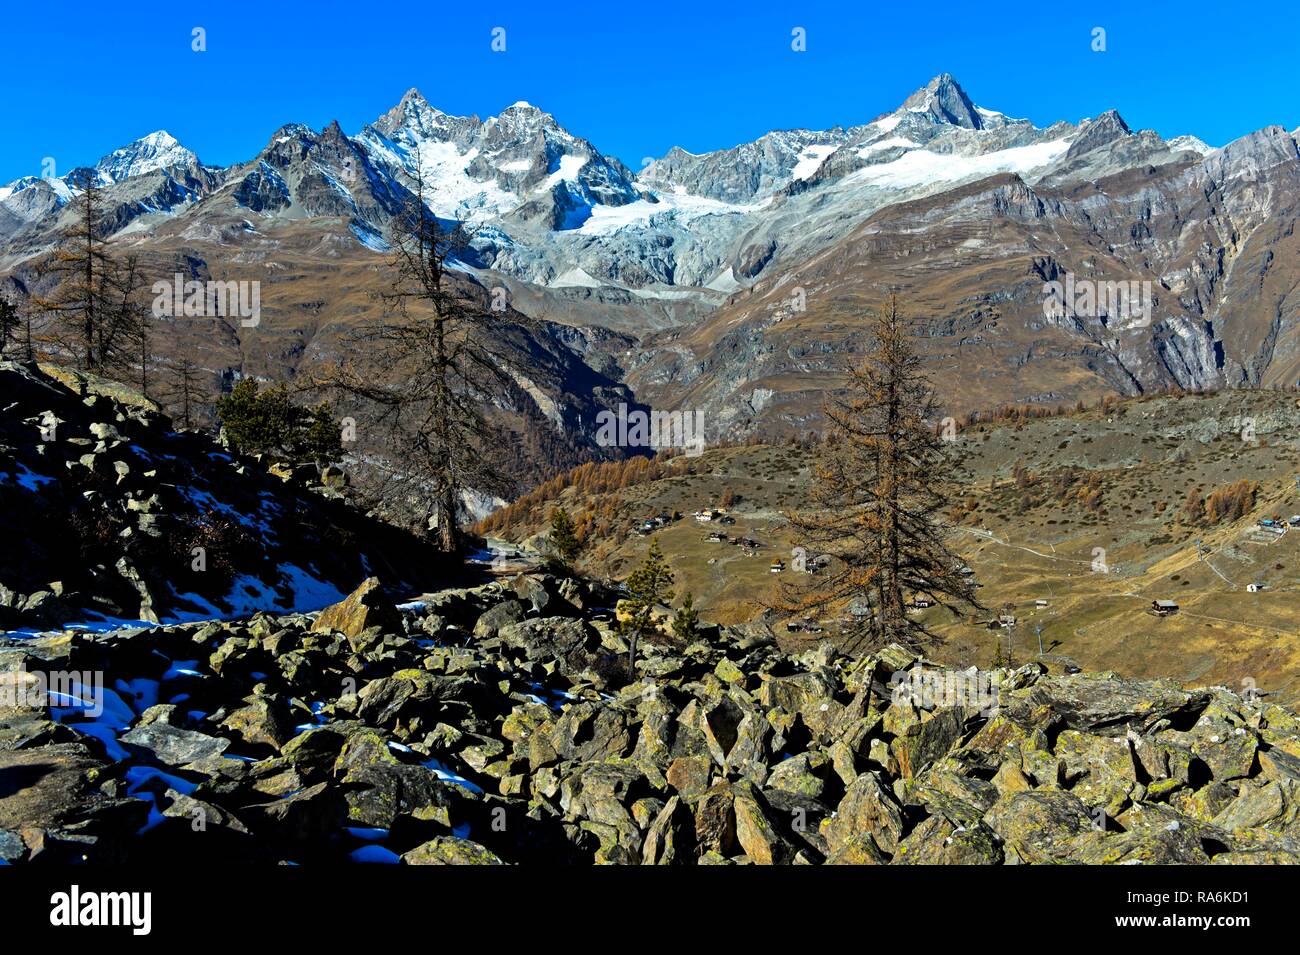 Atrás de izquierda a derecha fotografías e imágenes de alta resolución -  Alamy